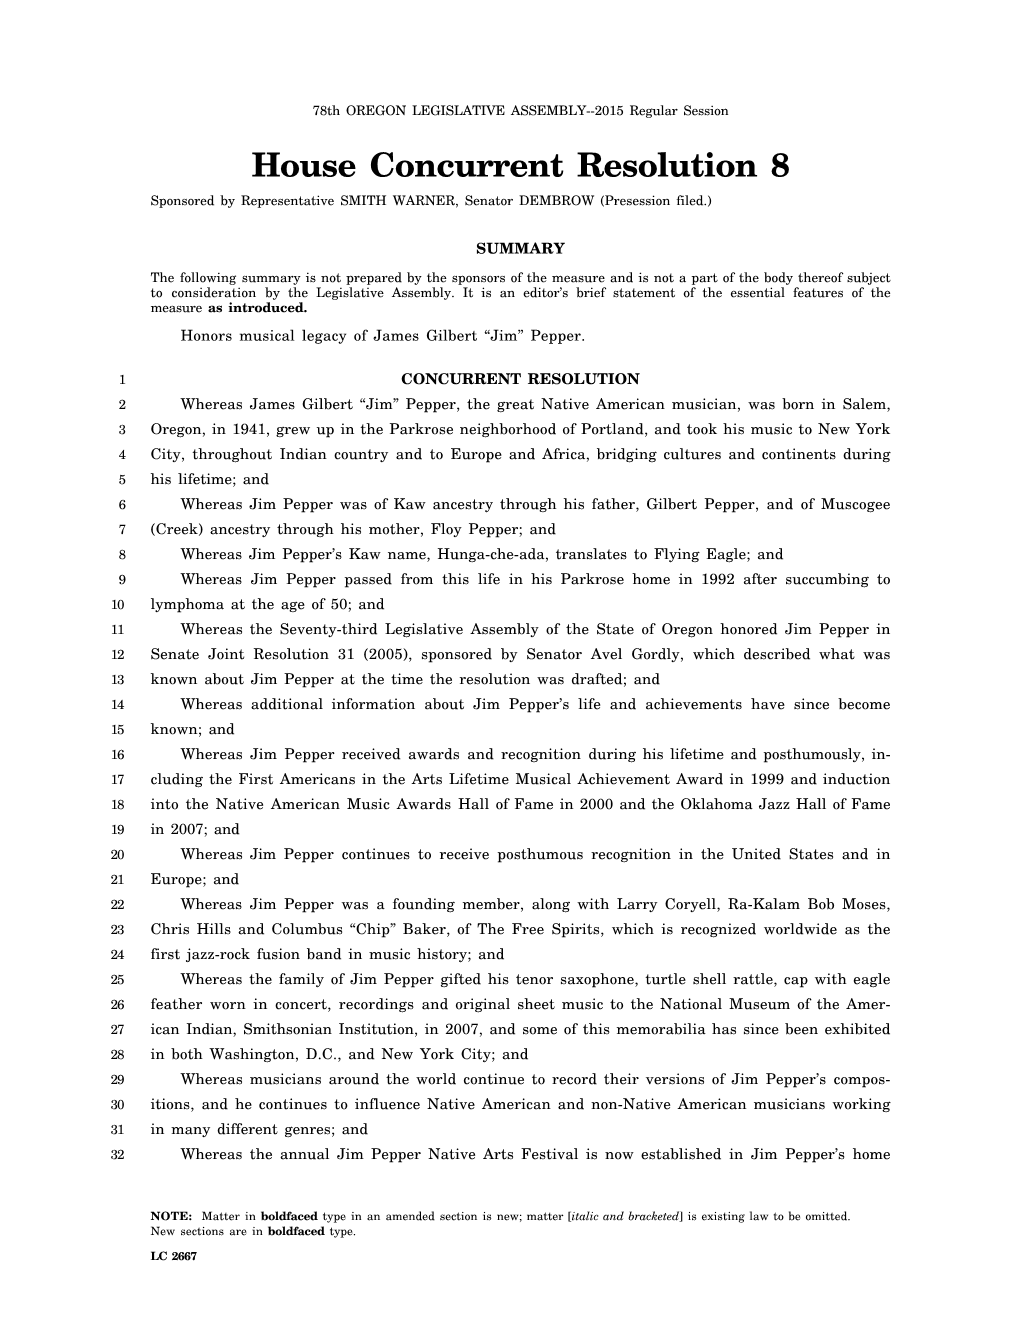 House Concurrent Resolution 8 Sponsored by Representative SMITH WARNER, Senator DEMBROW (Presession Filed.)